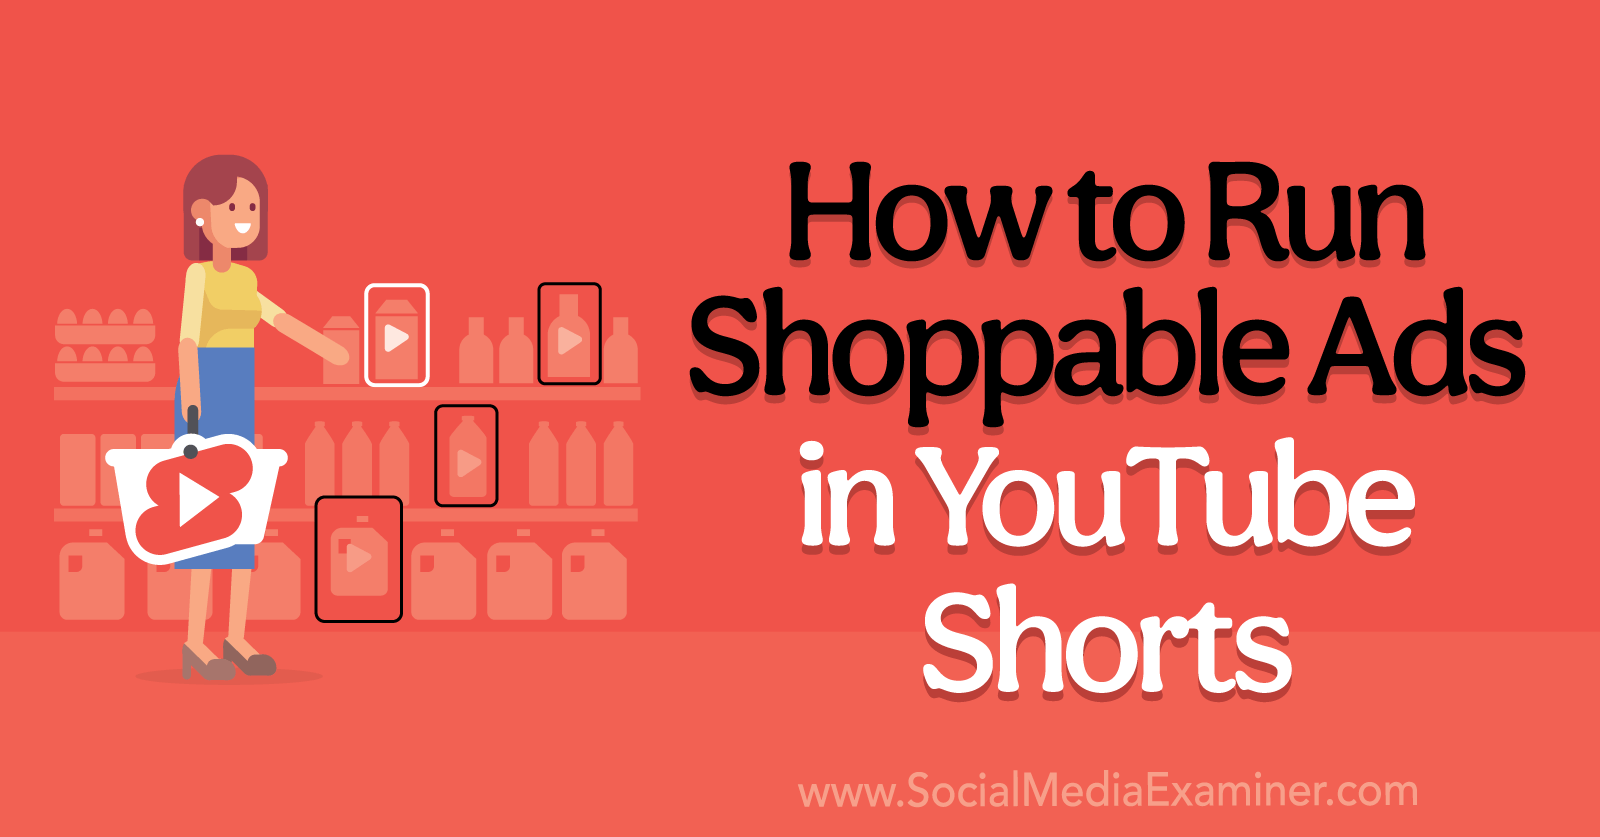 How to Run Shoppable Ads in YouTube Shorts-Social Media Examiner